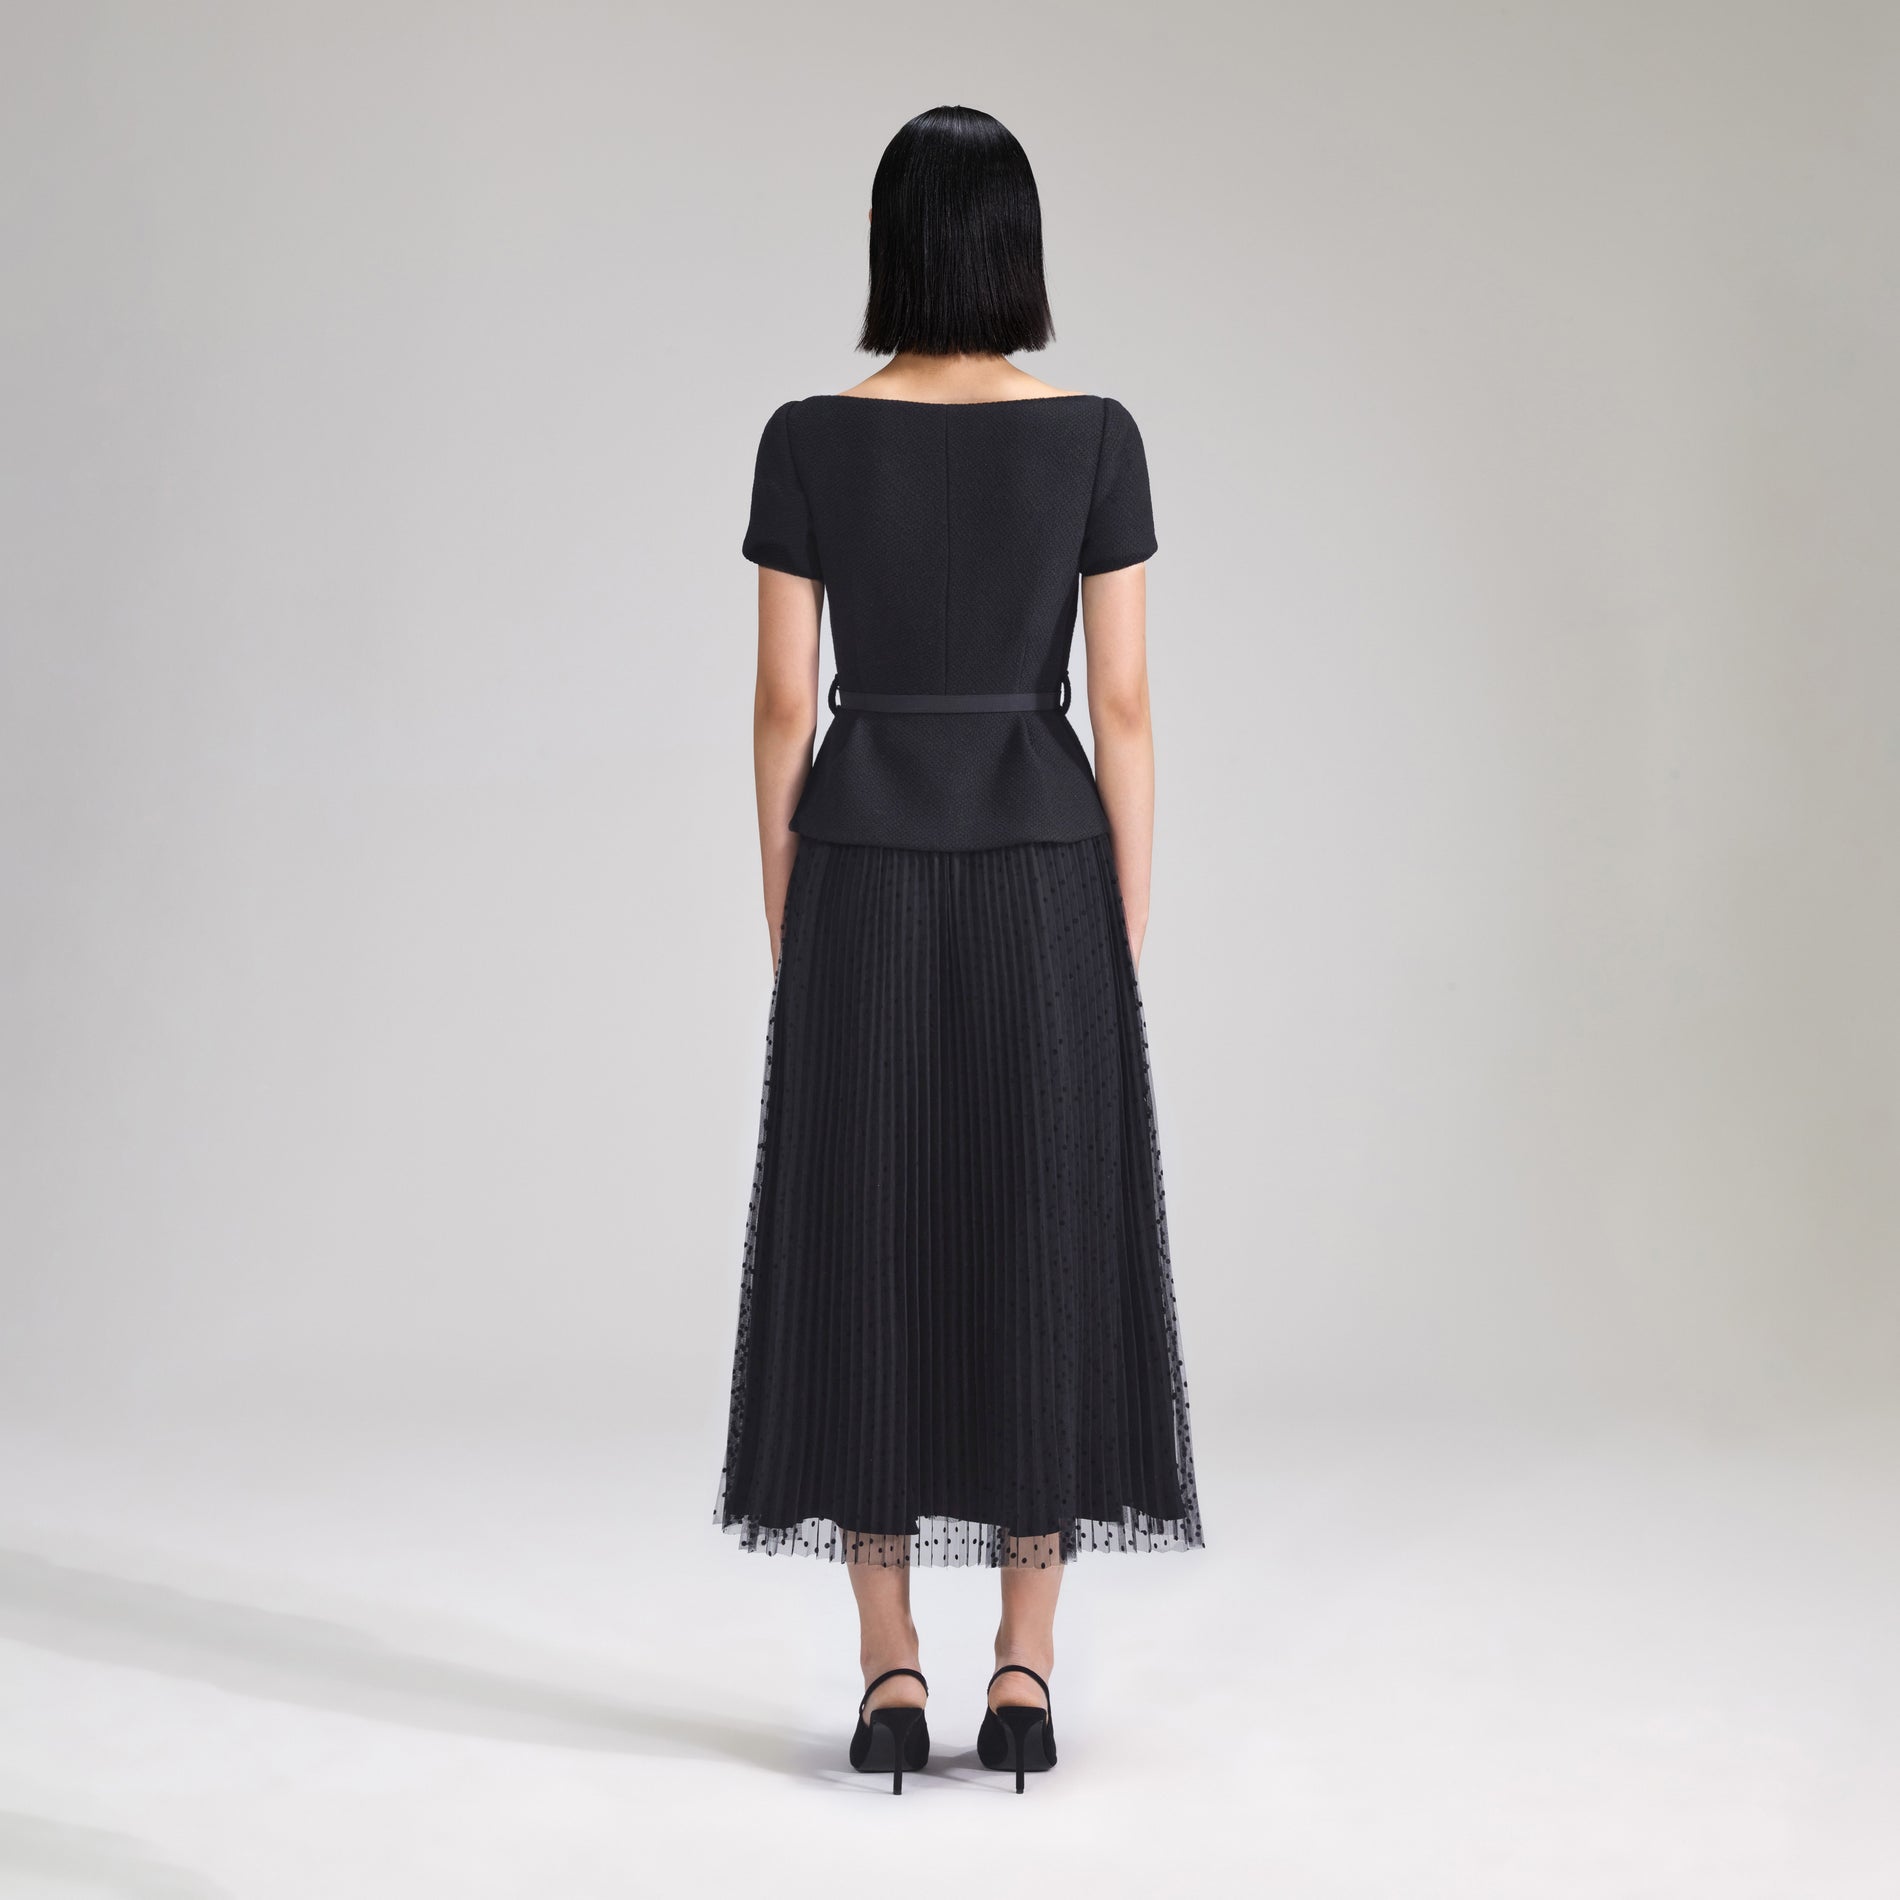 A woman wearing the Black Off Shoulder Midi Dress